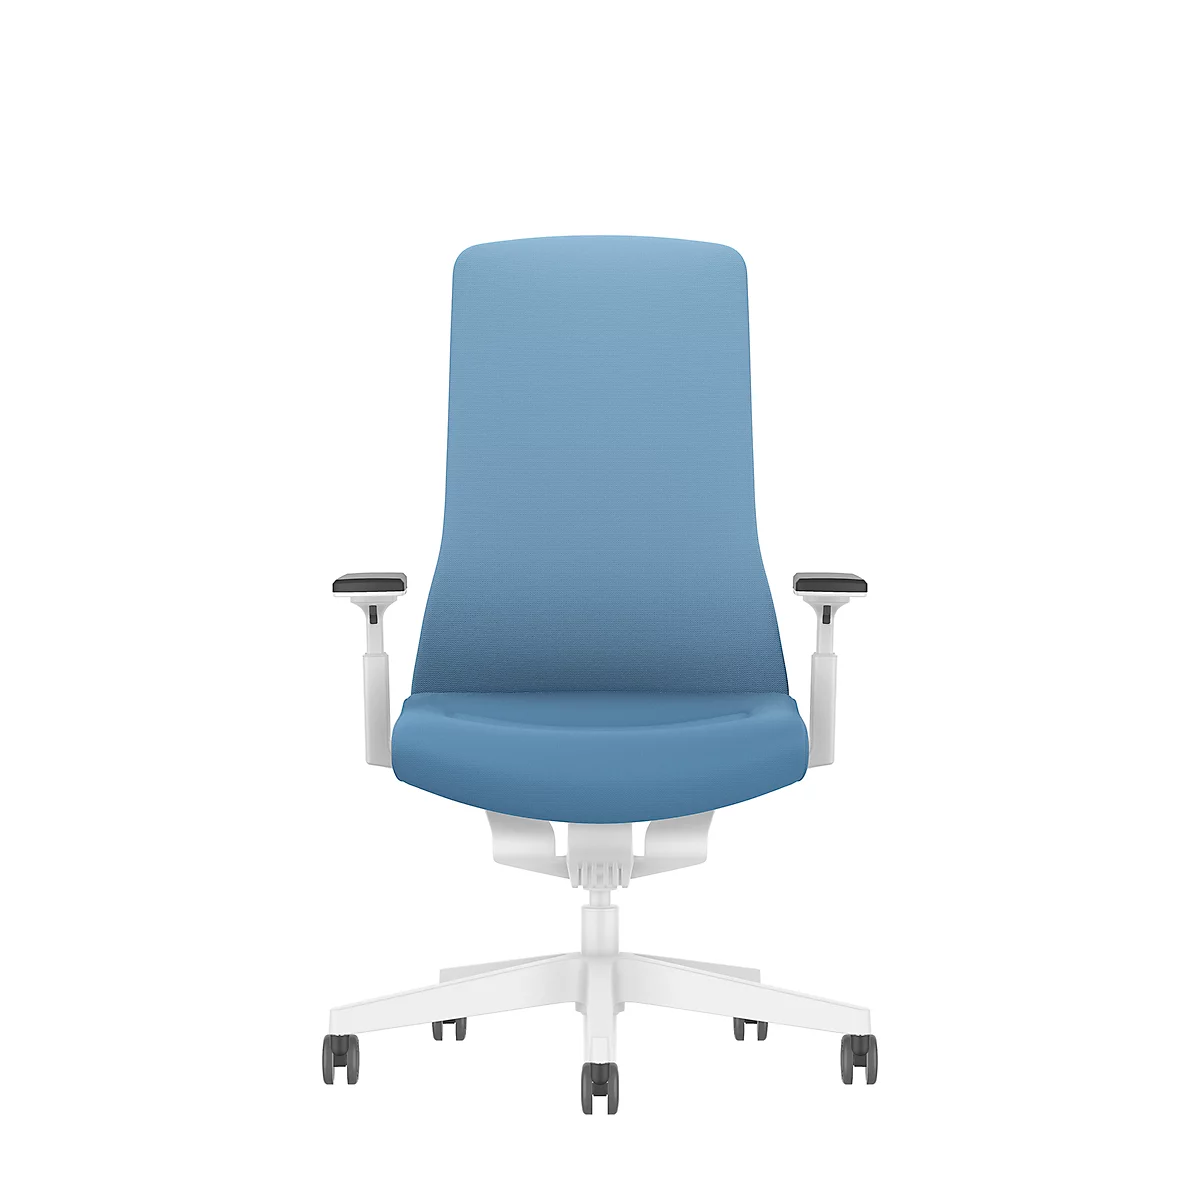 Interstuhl bureaustoel PUREis3, verstelbare armleuningen, 3D auto-synchroonmechanisme, kuipzitting, gestoffeerde rug, pastelblauw/wit